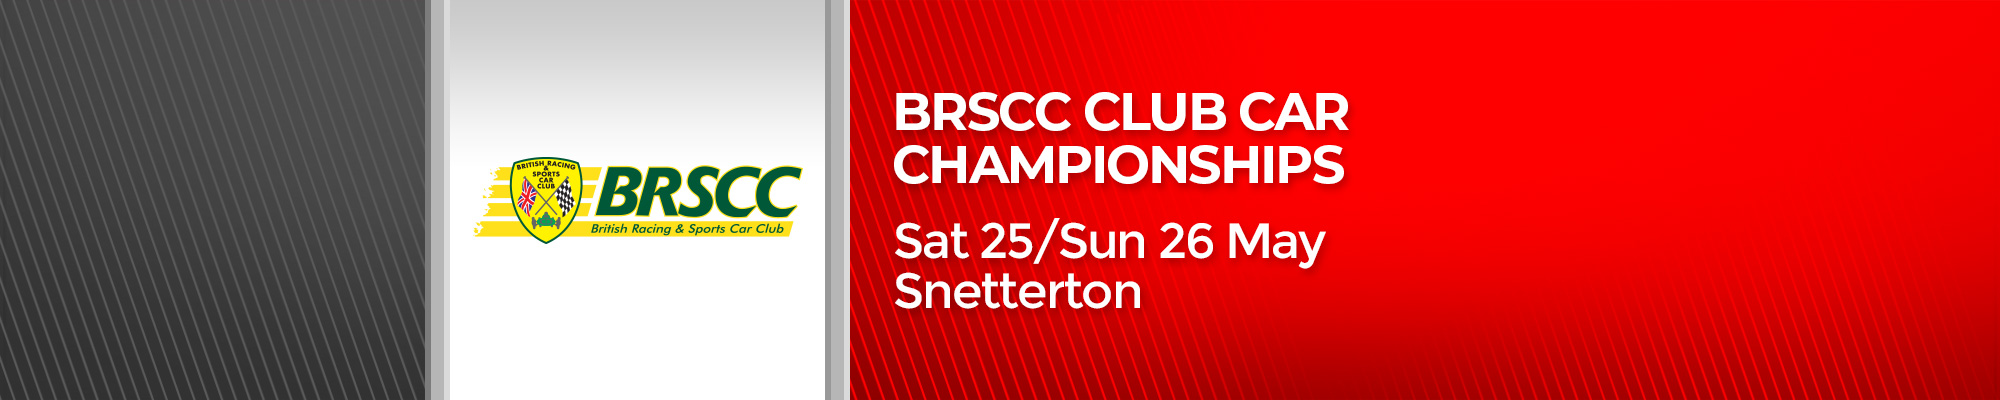 BRSCC Club Car Championships